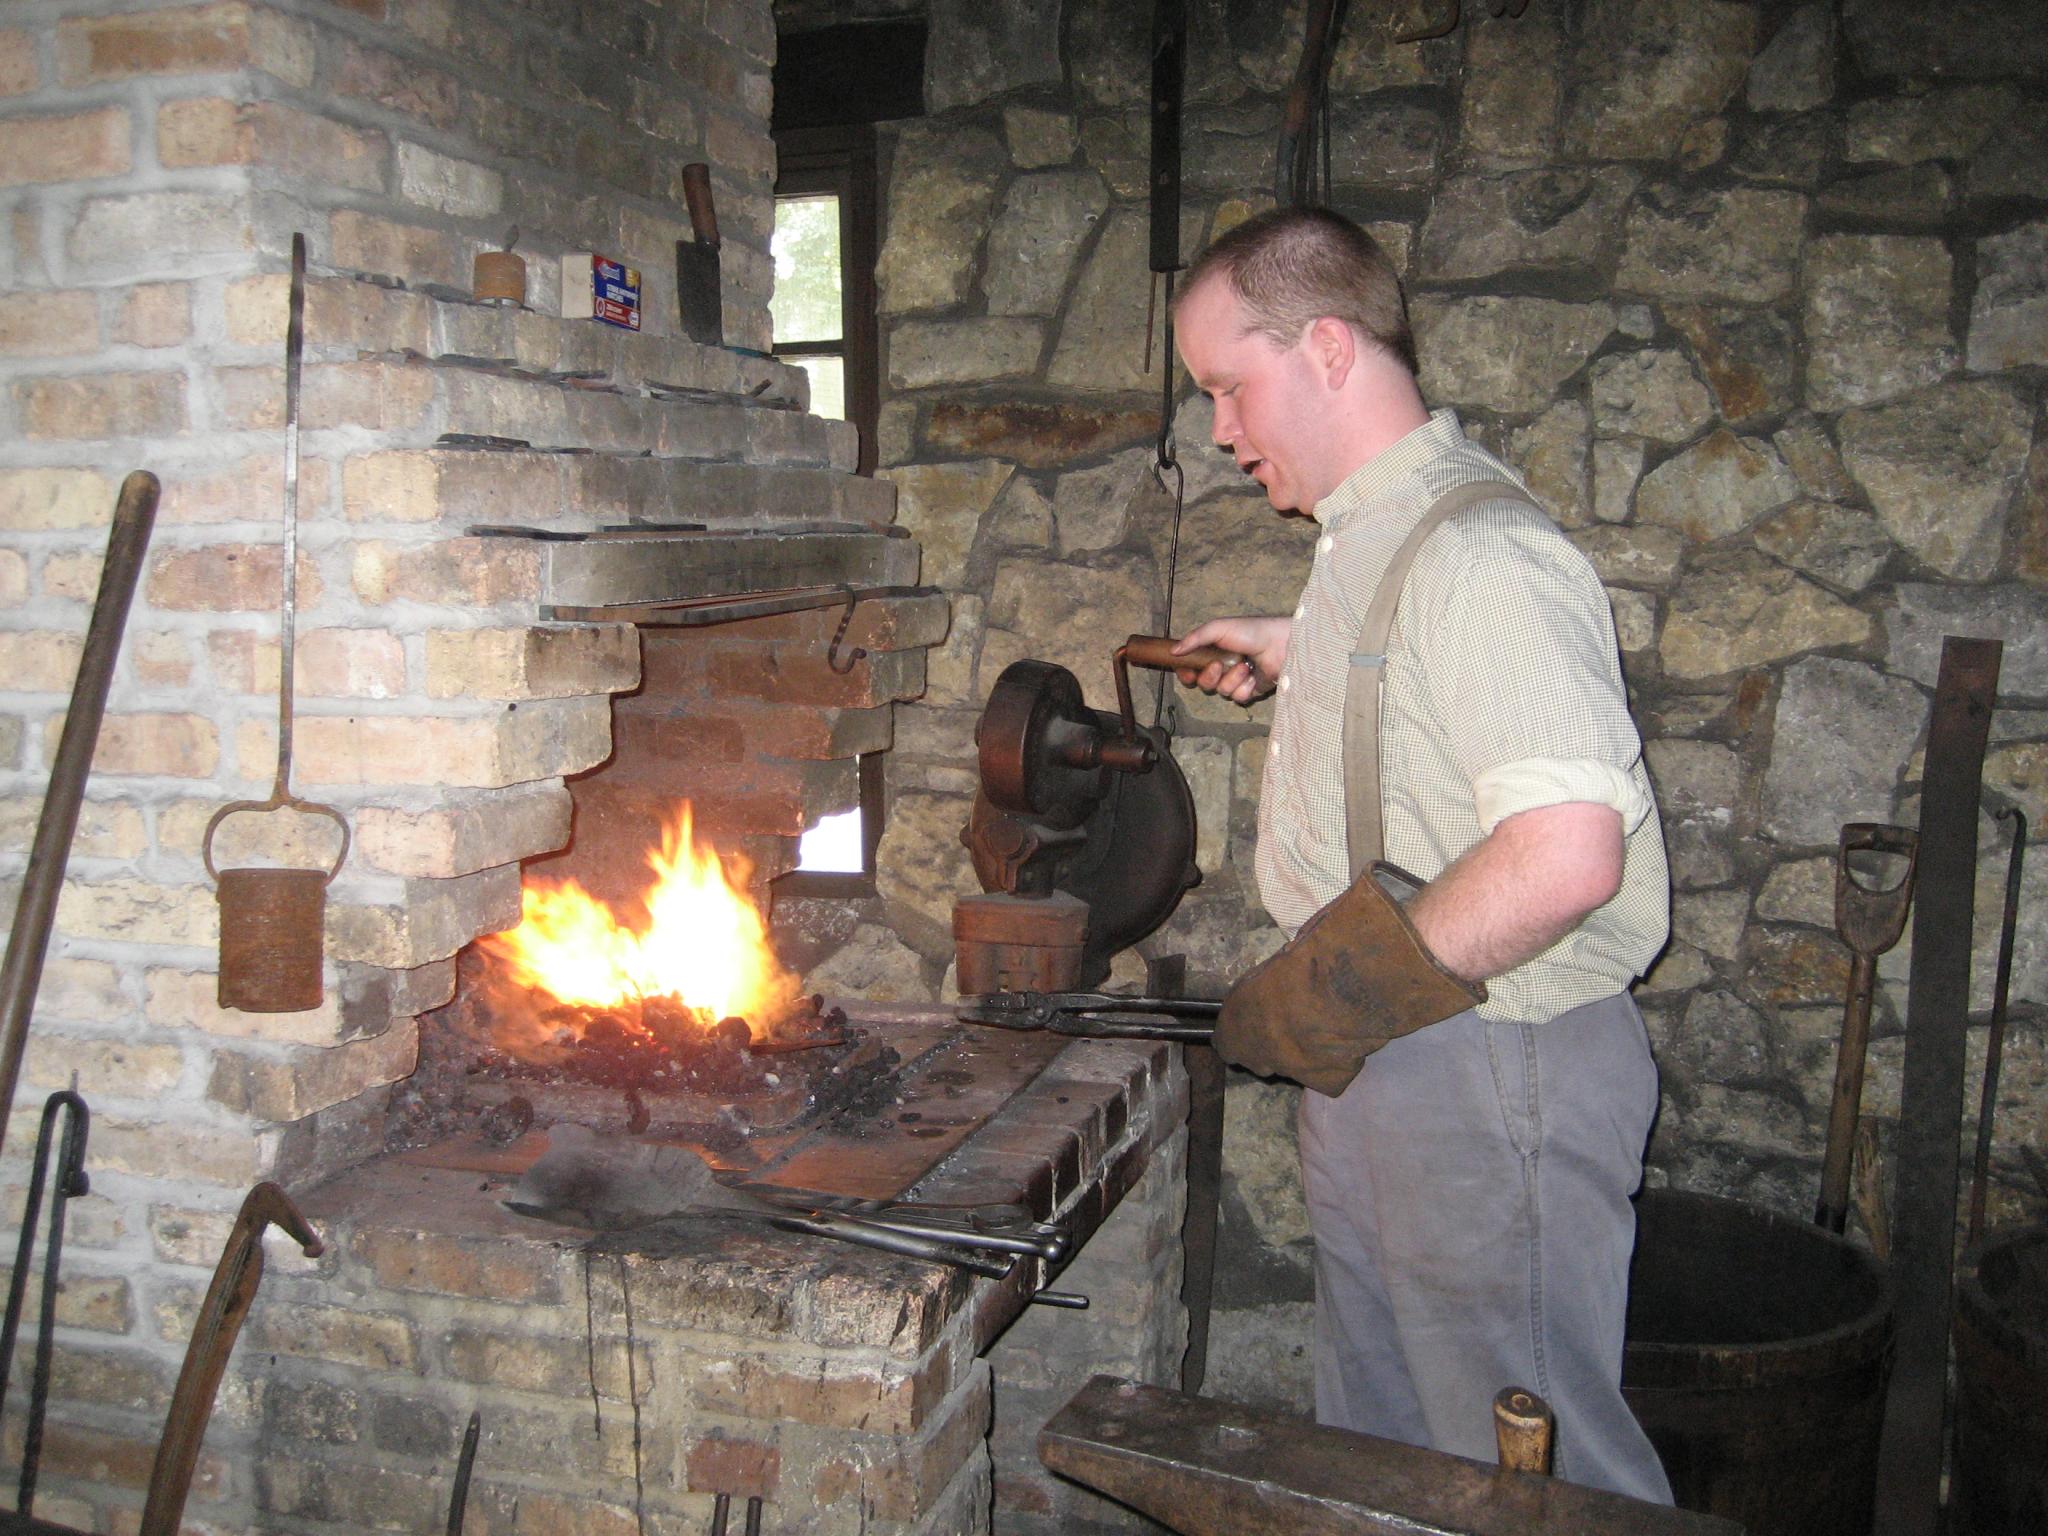 Blacksmith using forge in Blacksmith Shop